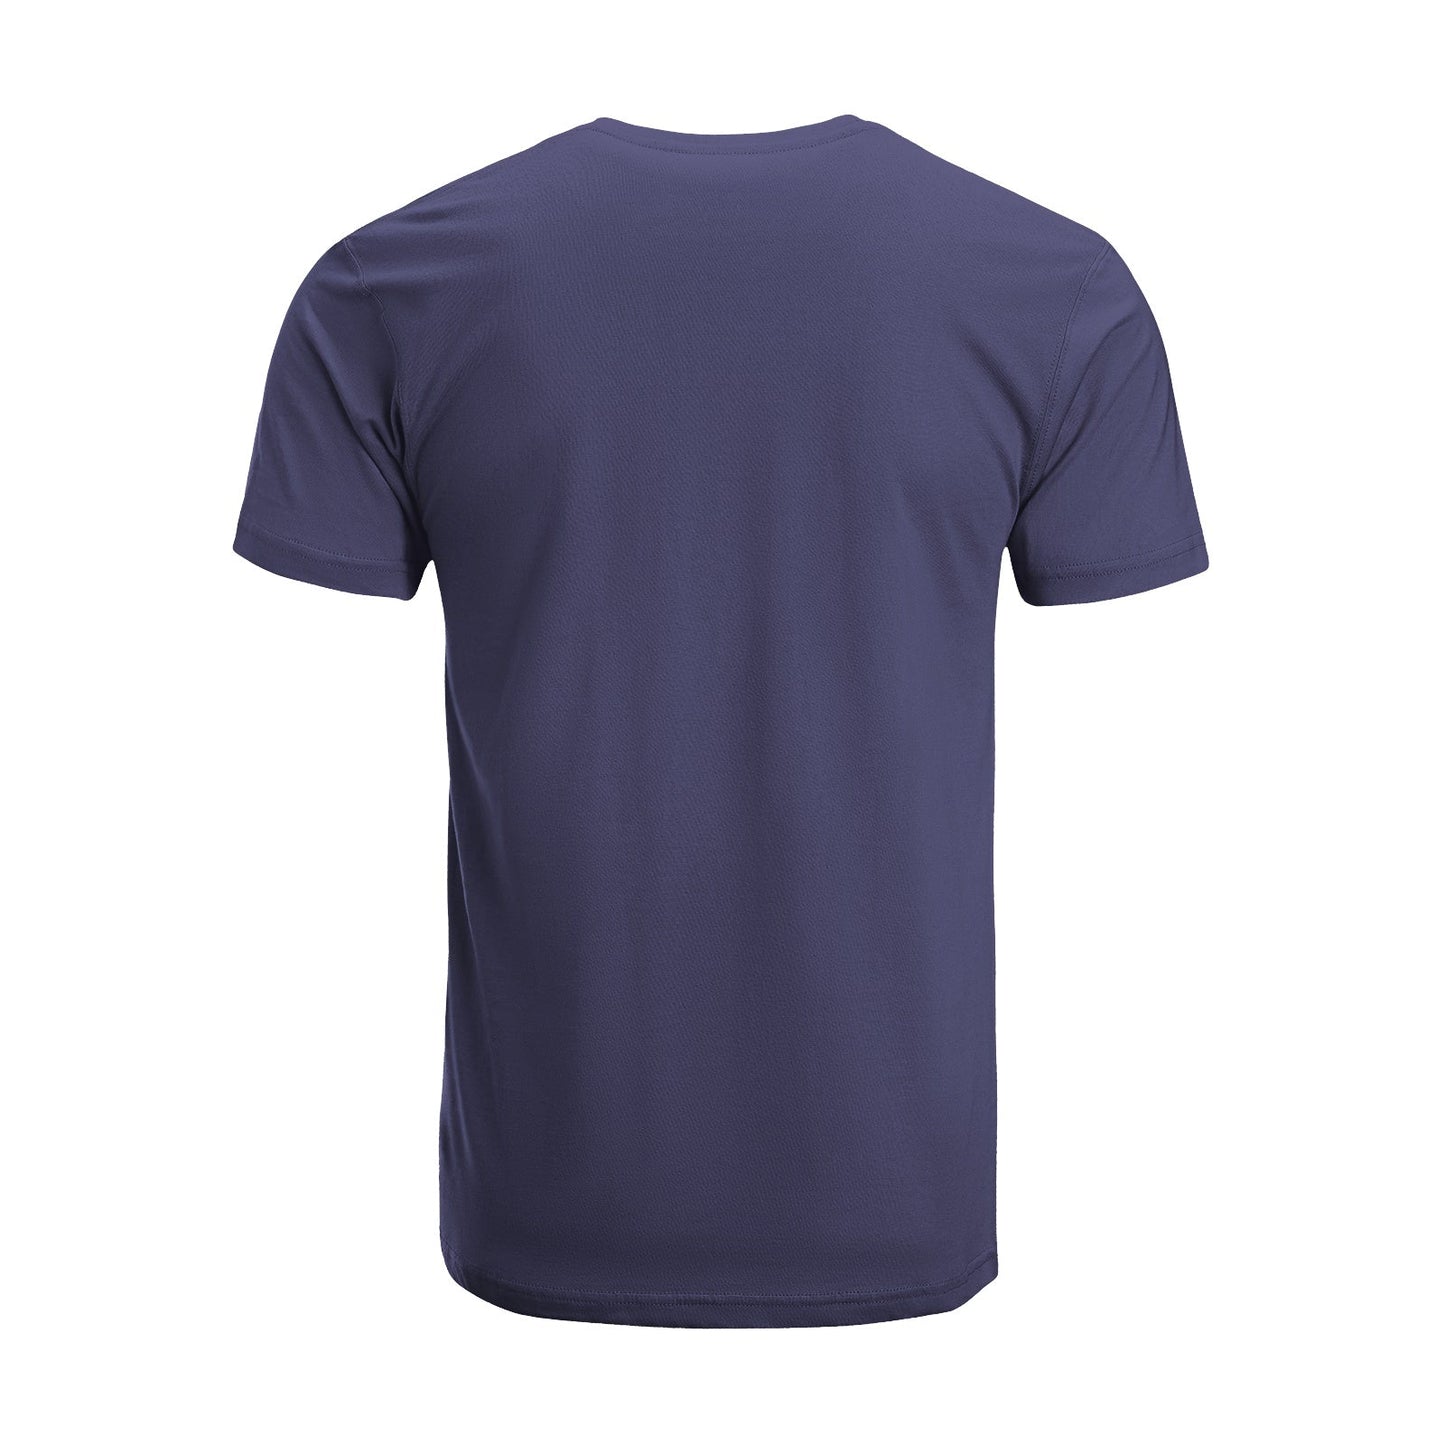 Unisex Short Sleeve Crew Neck Cotton Jersey T-Shirt CAT 08 - Tara-Outfits.com